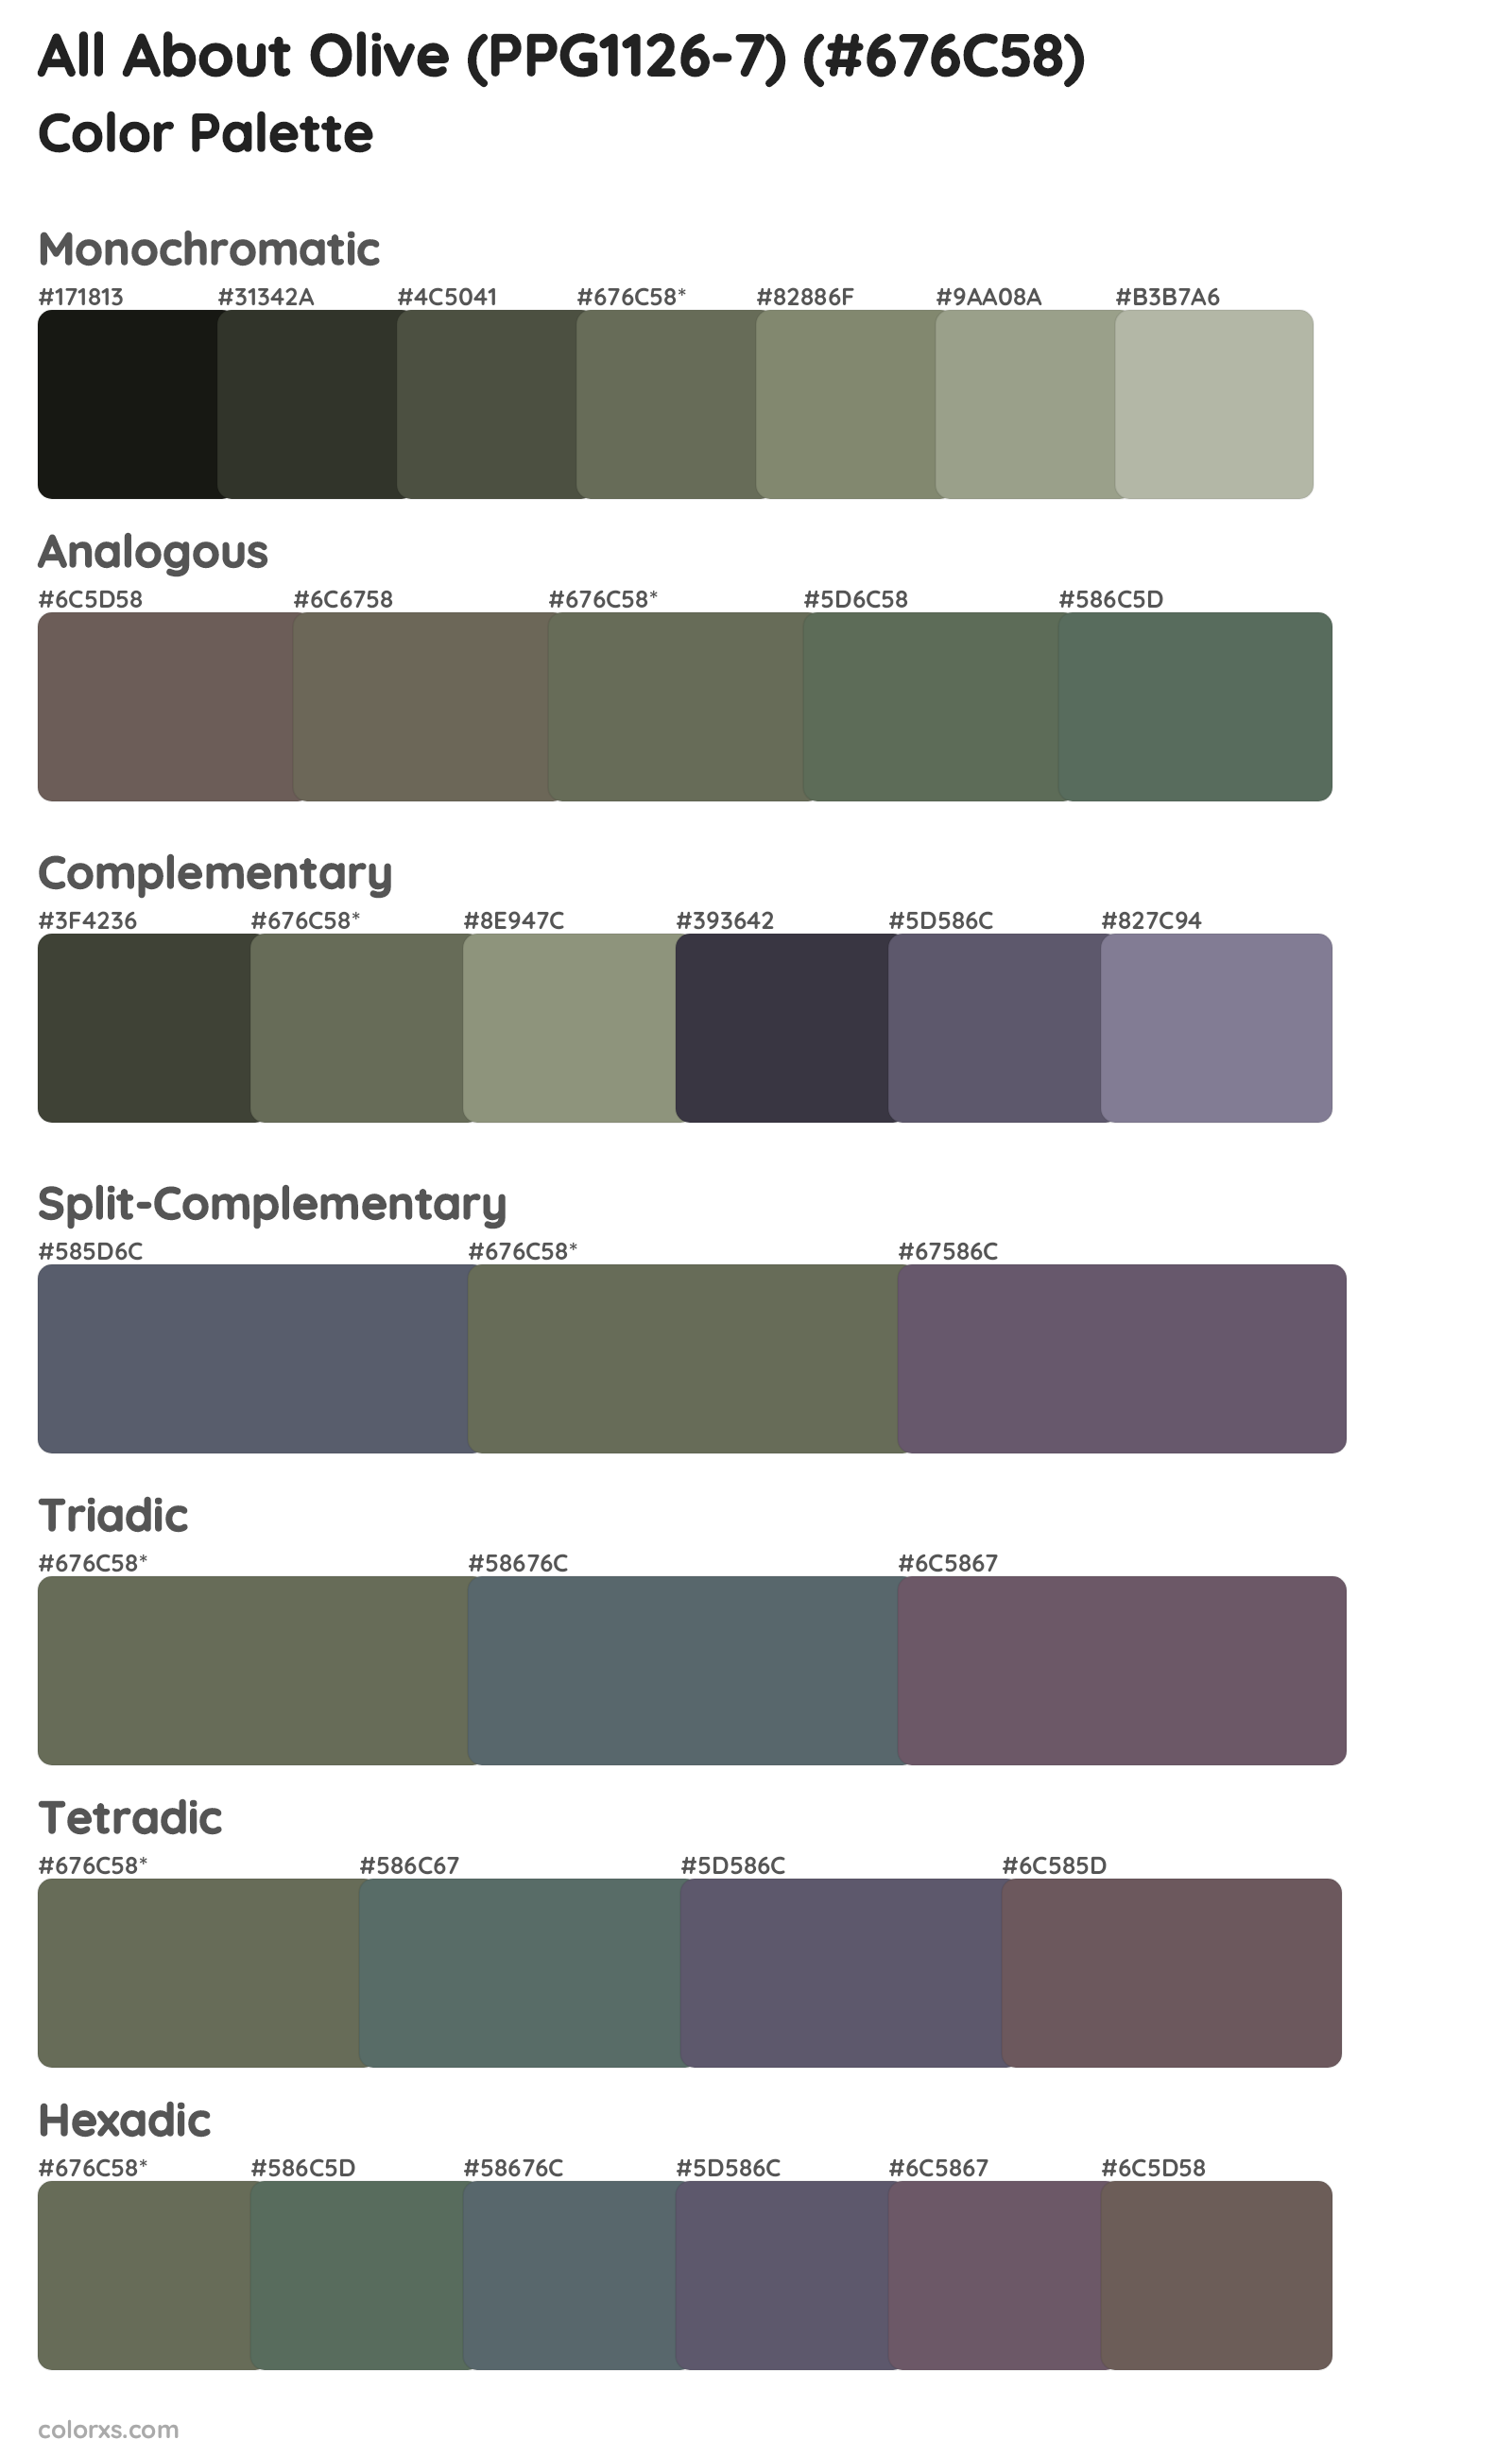 All About Olive (PPG1126-7) Color Scheme Palettes